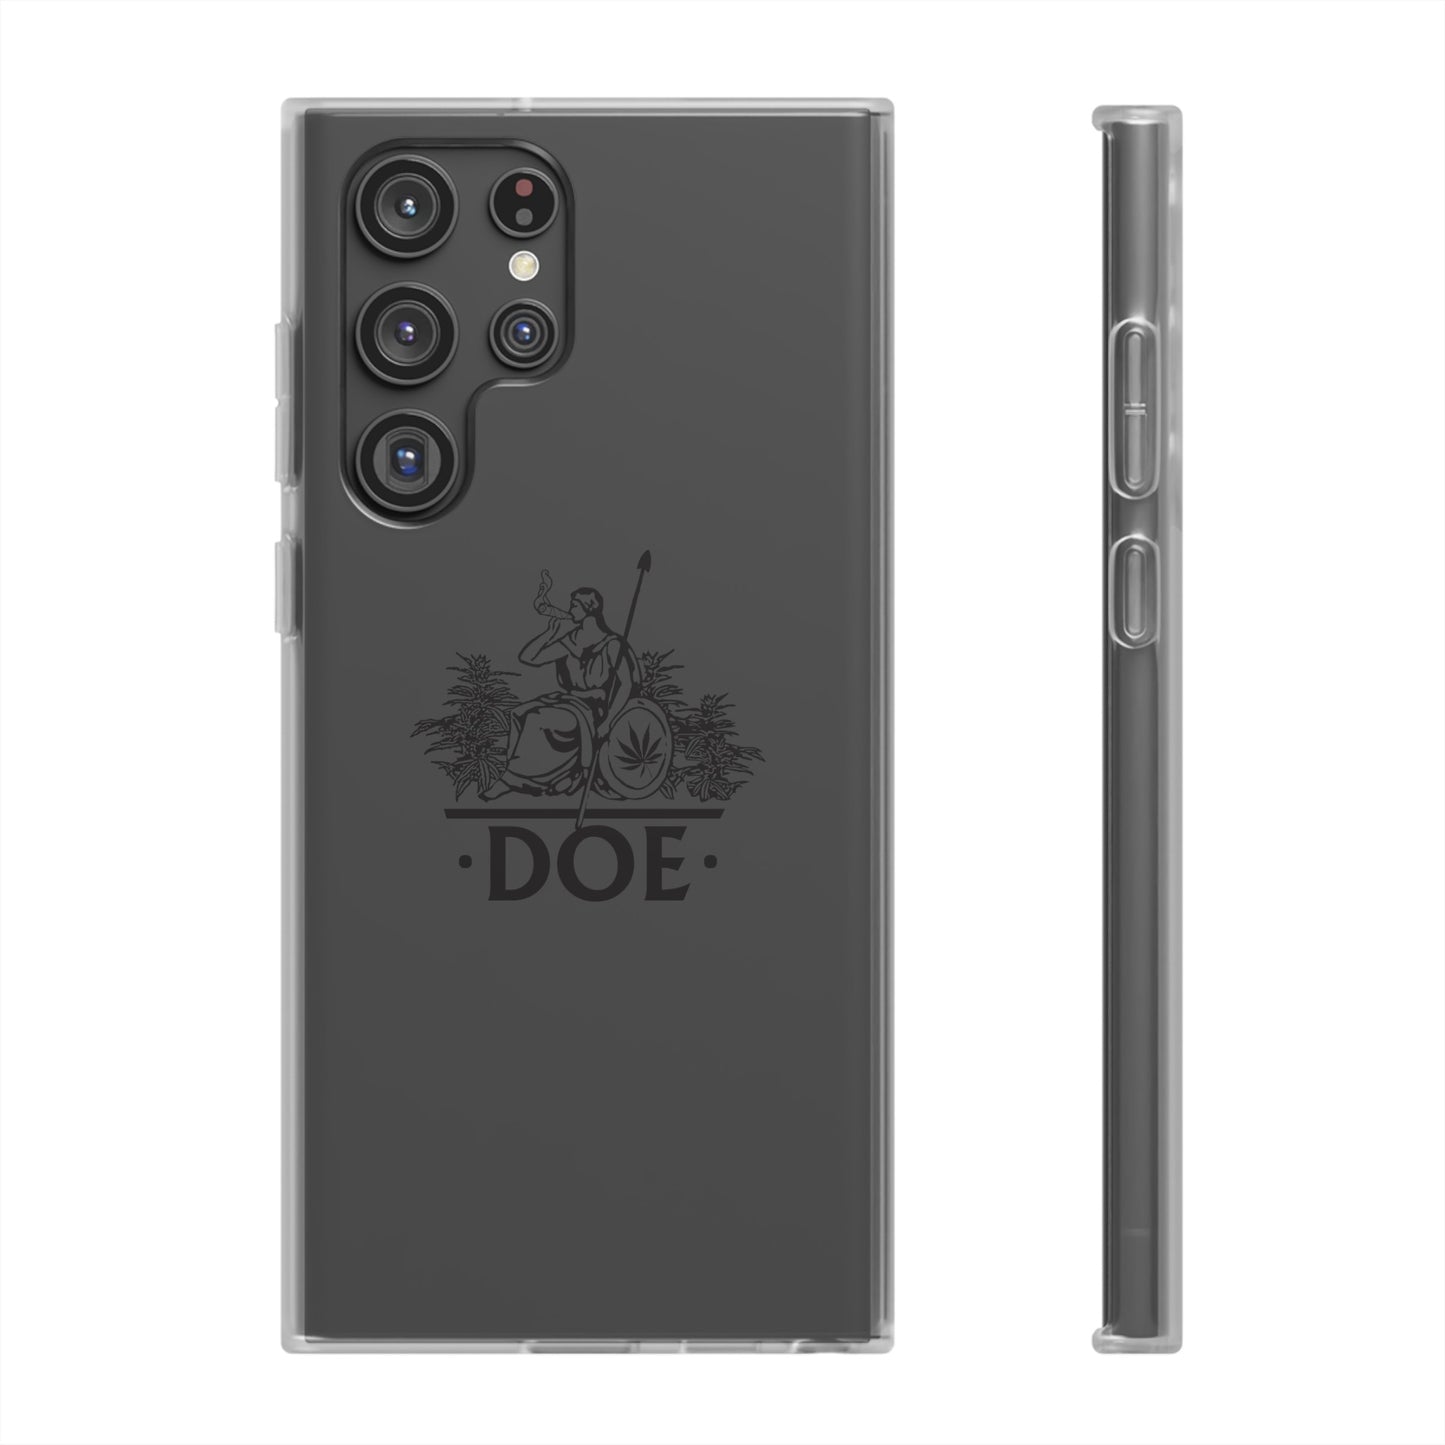 DOE V2 Soft Touch Phone Case